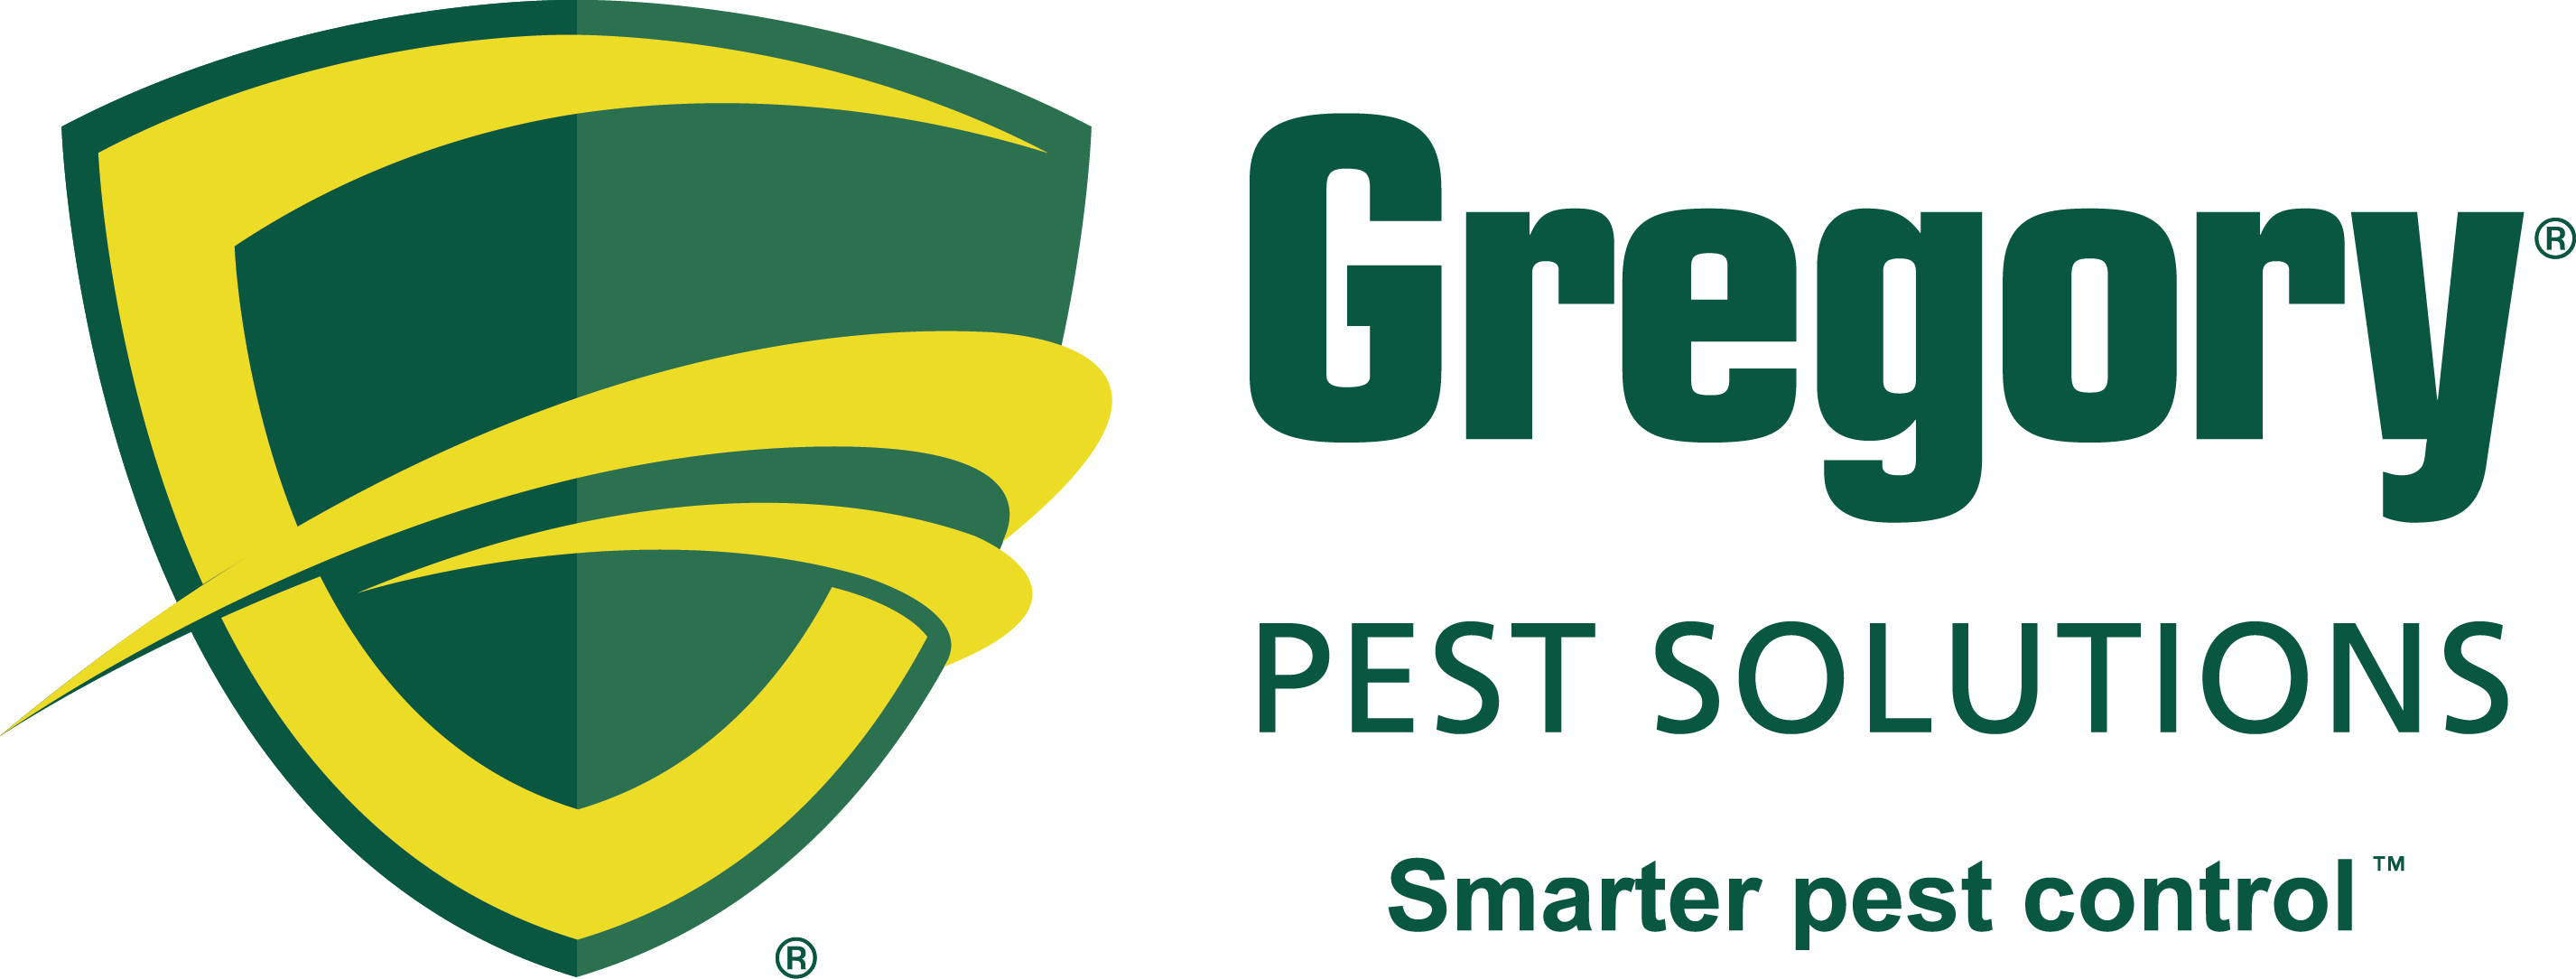 Gregory Logo - Gregory Pest Solutions Logo Symphony Orchestra